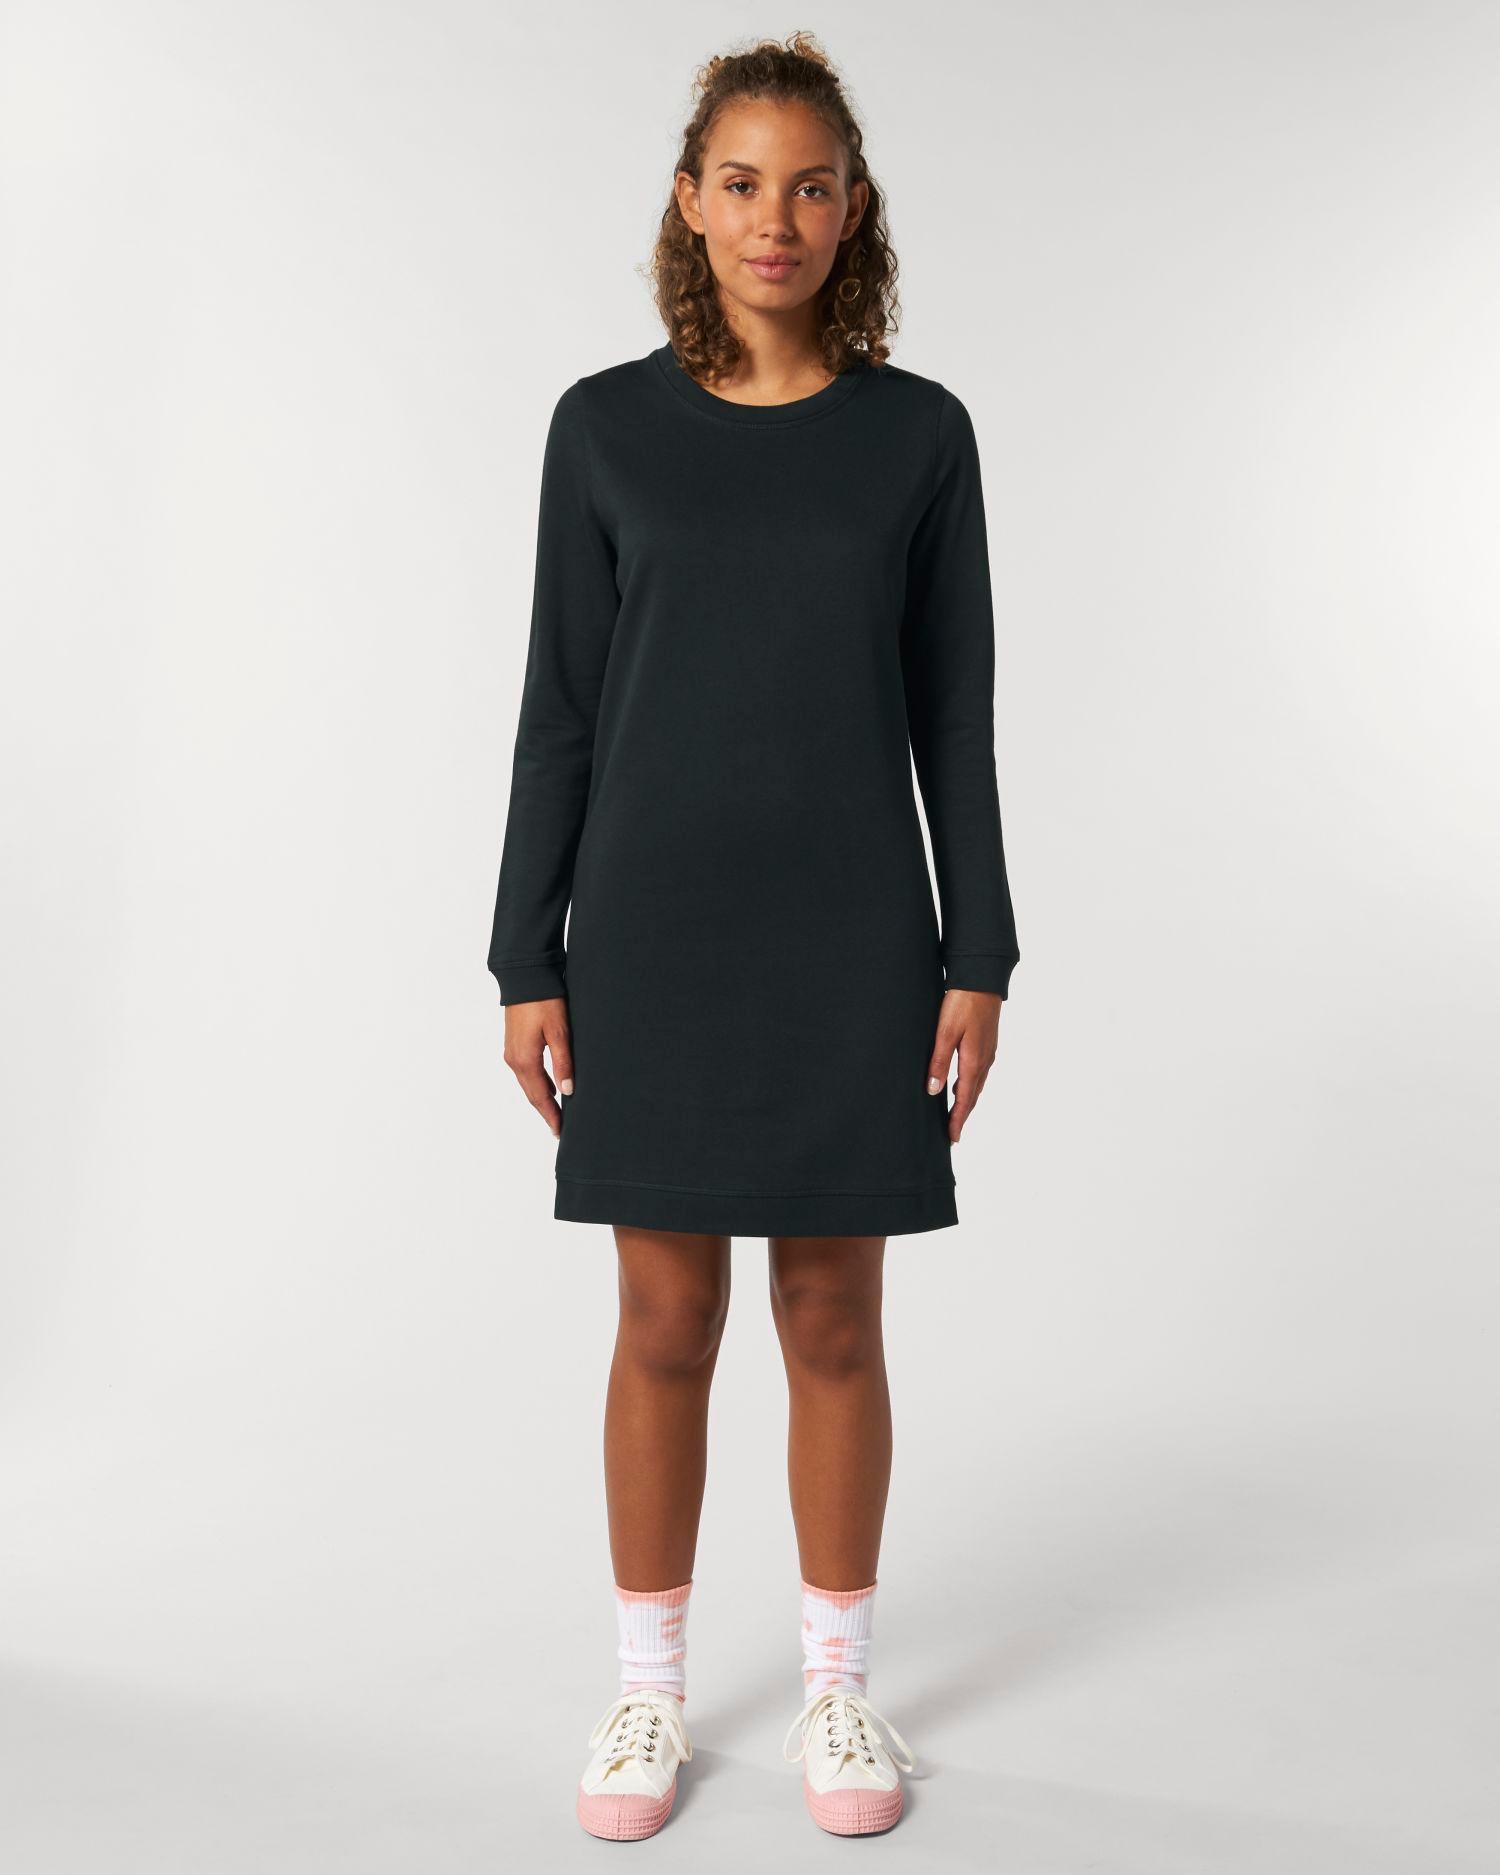 Stella Kicks Round Neck Sweatshirt Dress With Embroidery Or Digital Printing